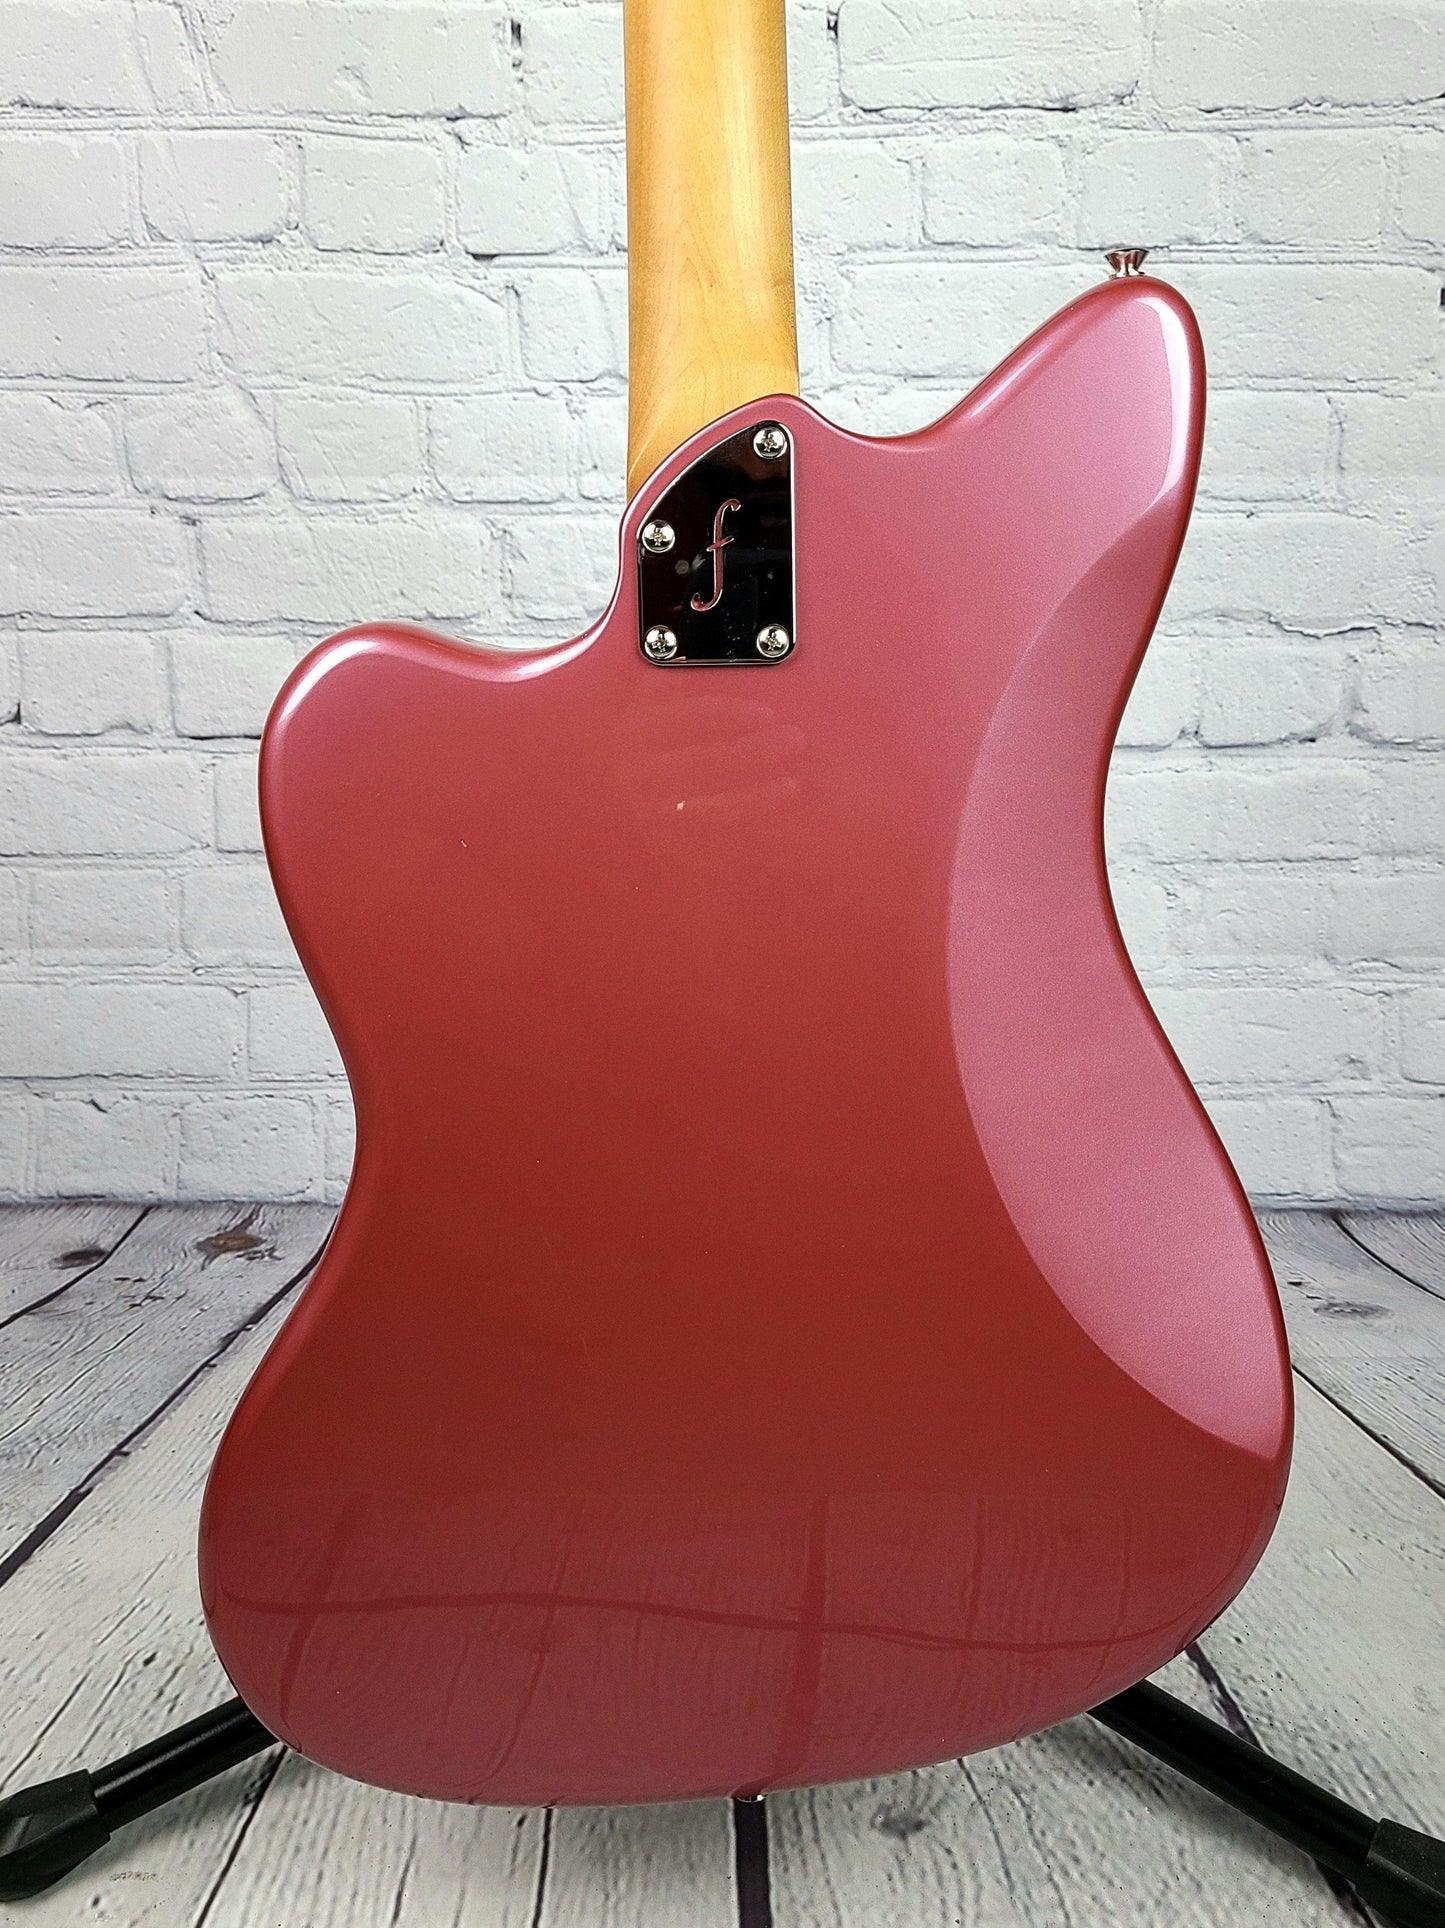 Fano JM6 Omnis Burgundy Mist Electric Guitar - Guitar Brando